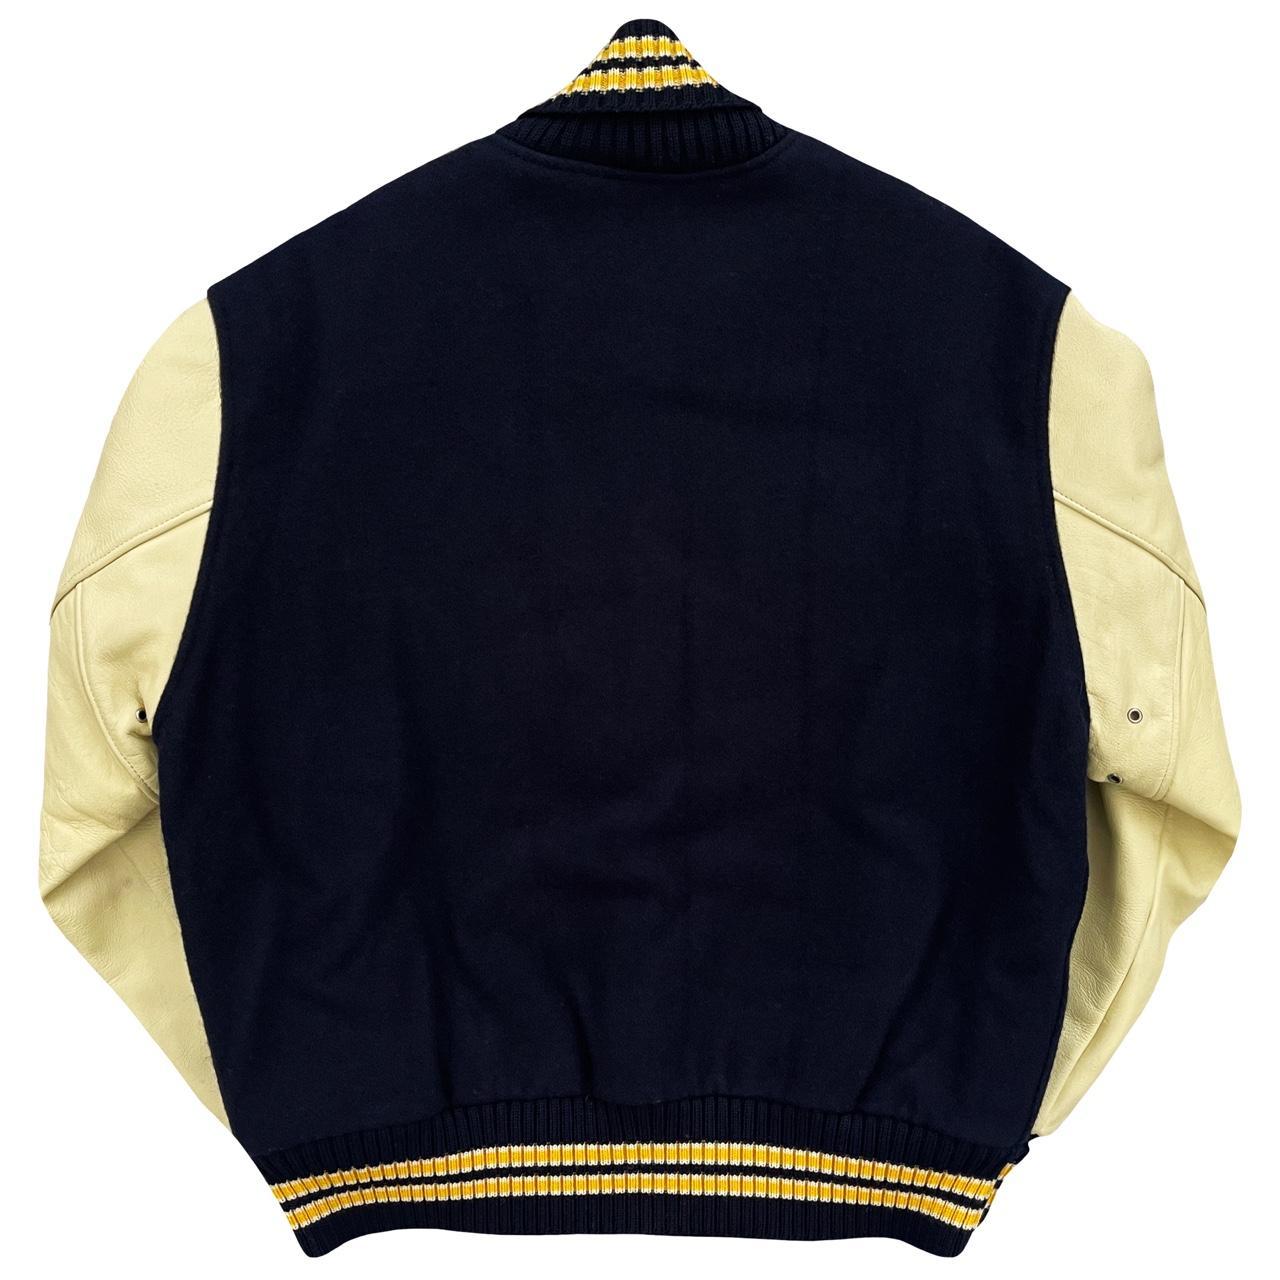 Japanese Varsity Jacket – The Holy Grail